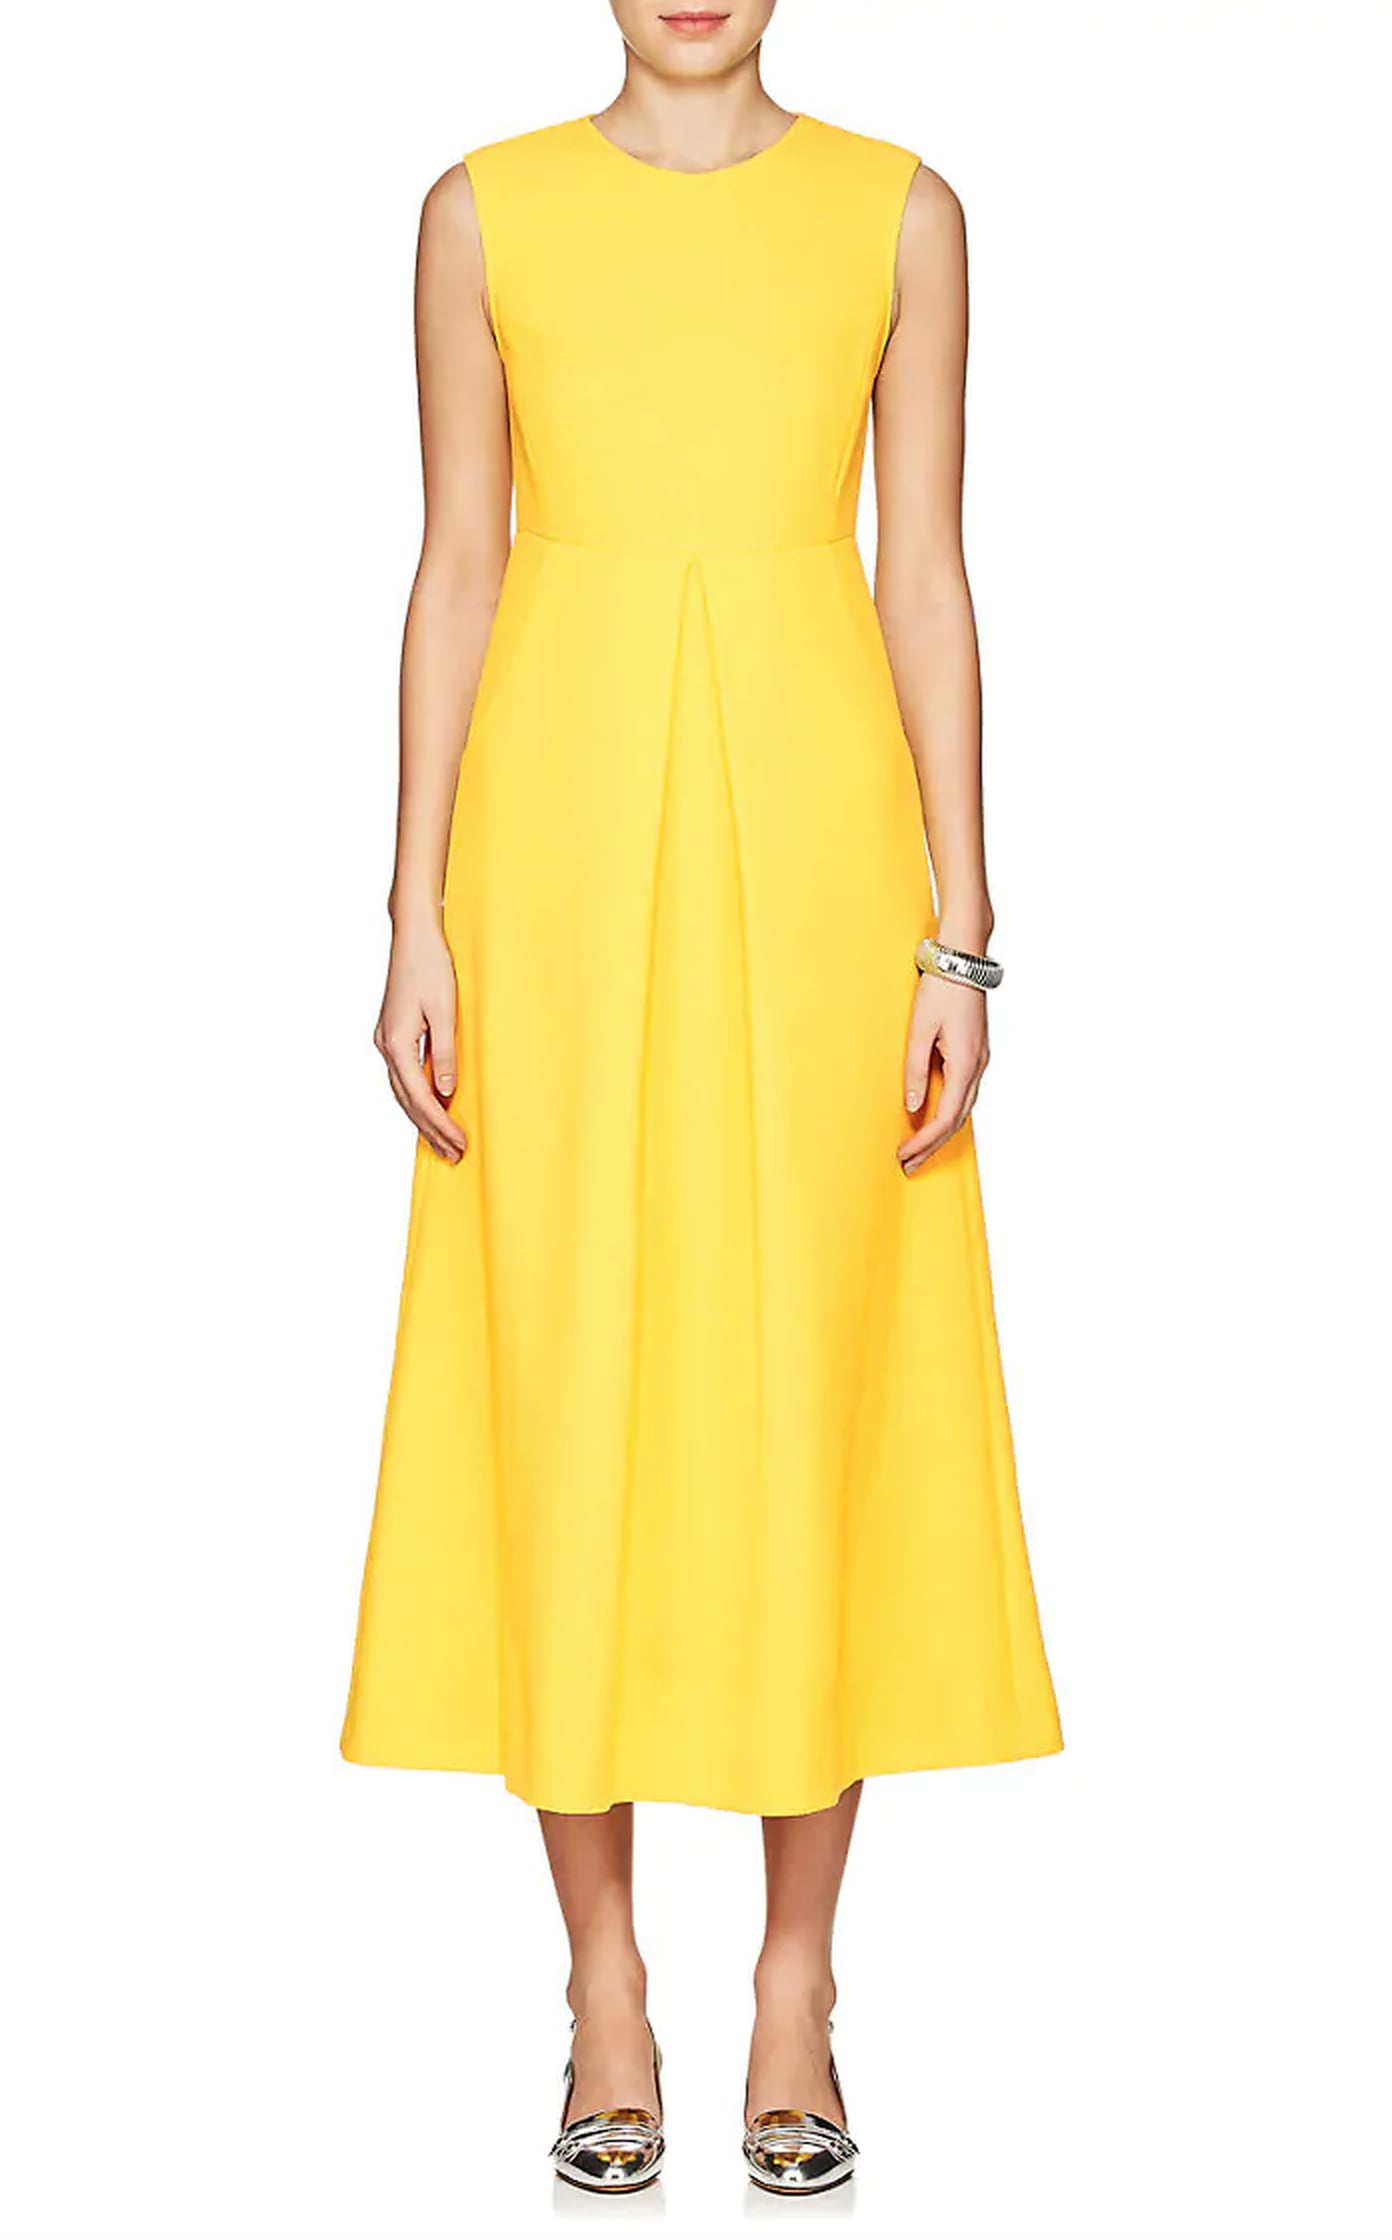 Meghan Markle Yellow Brandon Maxwell Dress | POPSUGAR Fashion